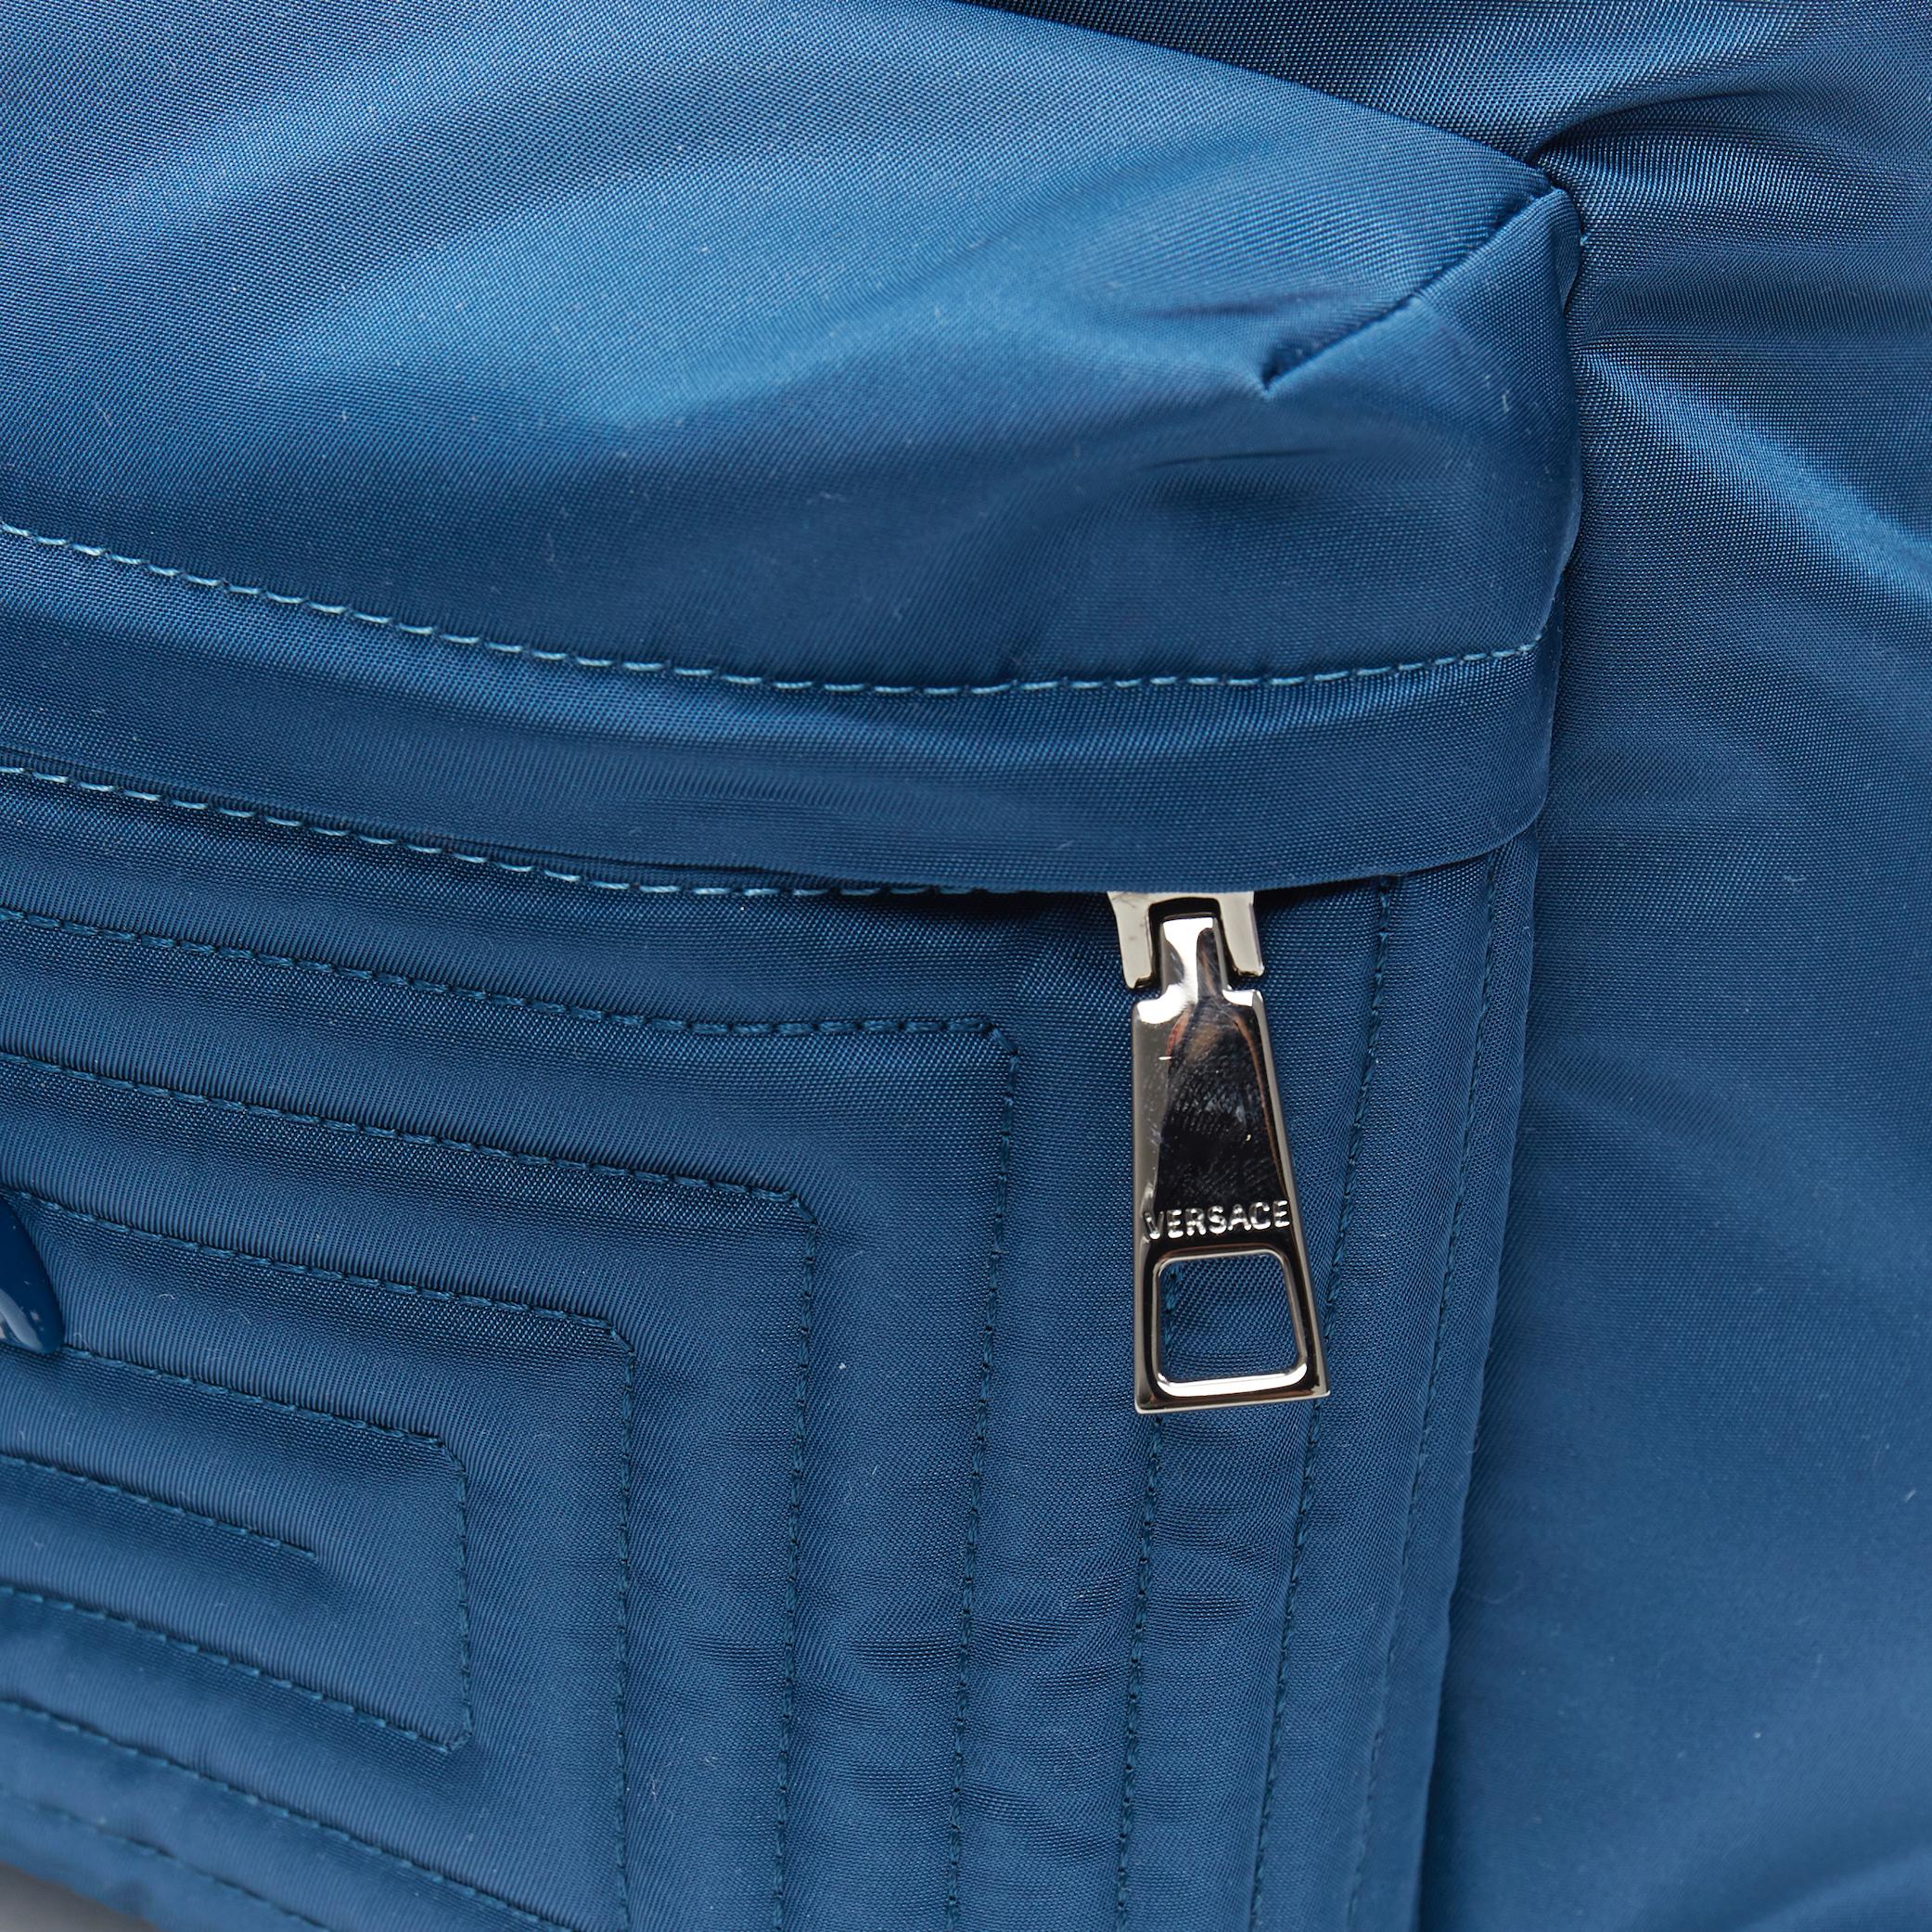 new VERSACE Palazzo Medusa navy blue nylon Greca pocket backpack bag 4